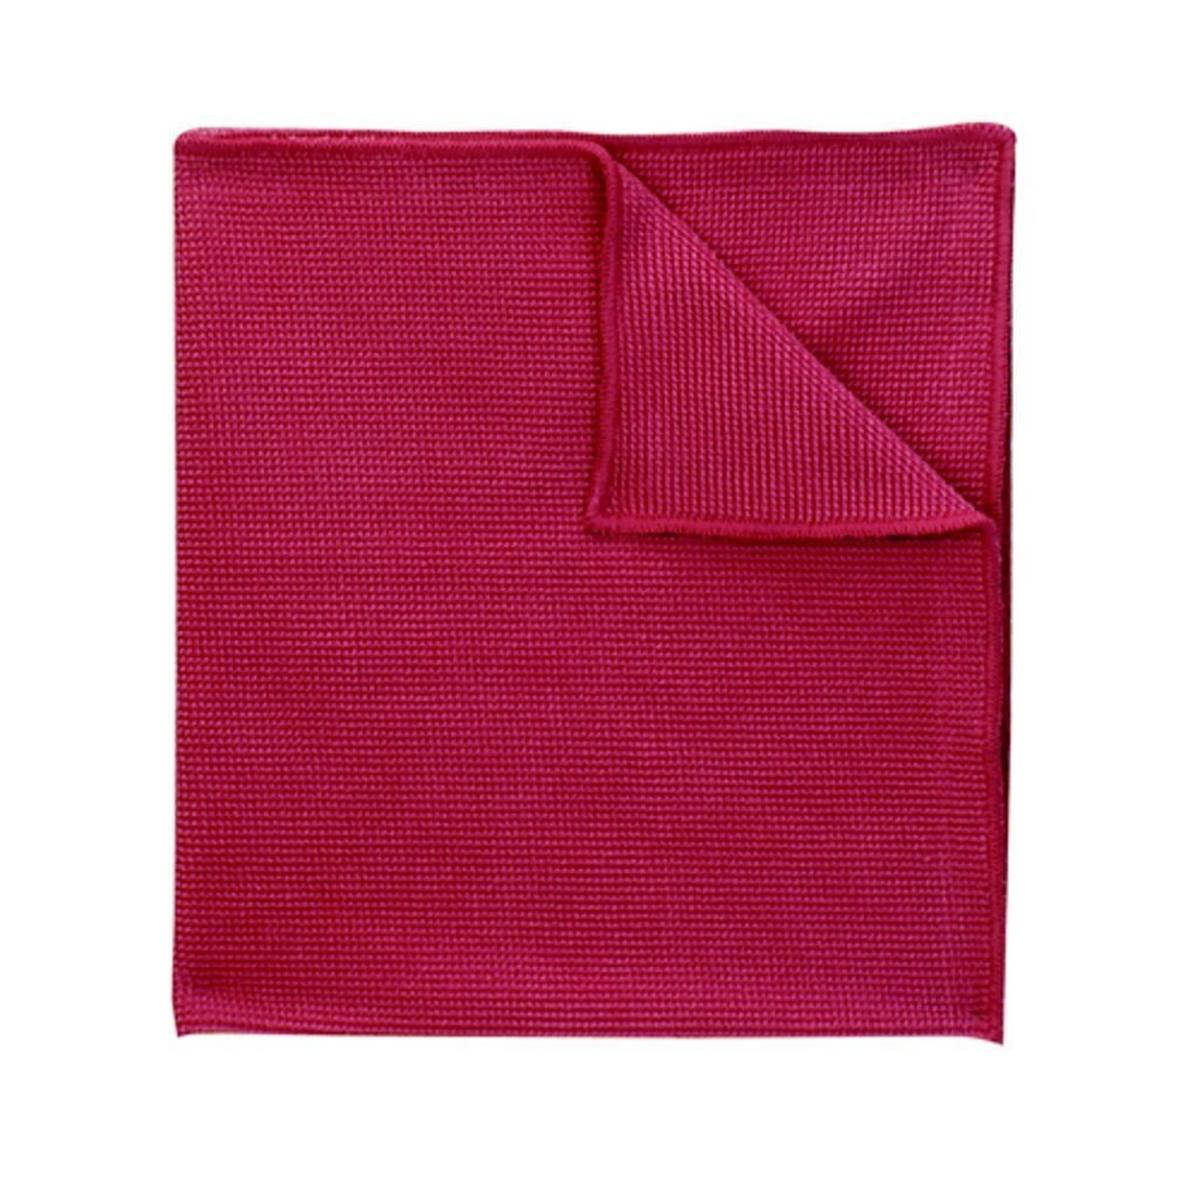 3M Scotch-Brite EssentEco microfibre cloth 2012, red, 360 mm x 360 mm